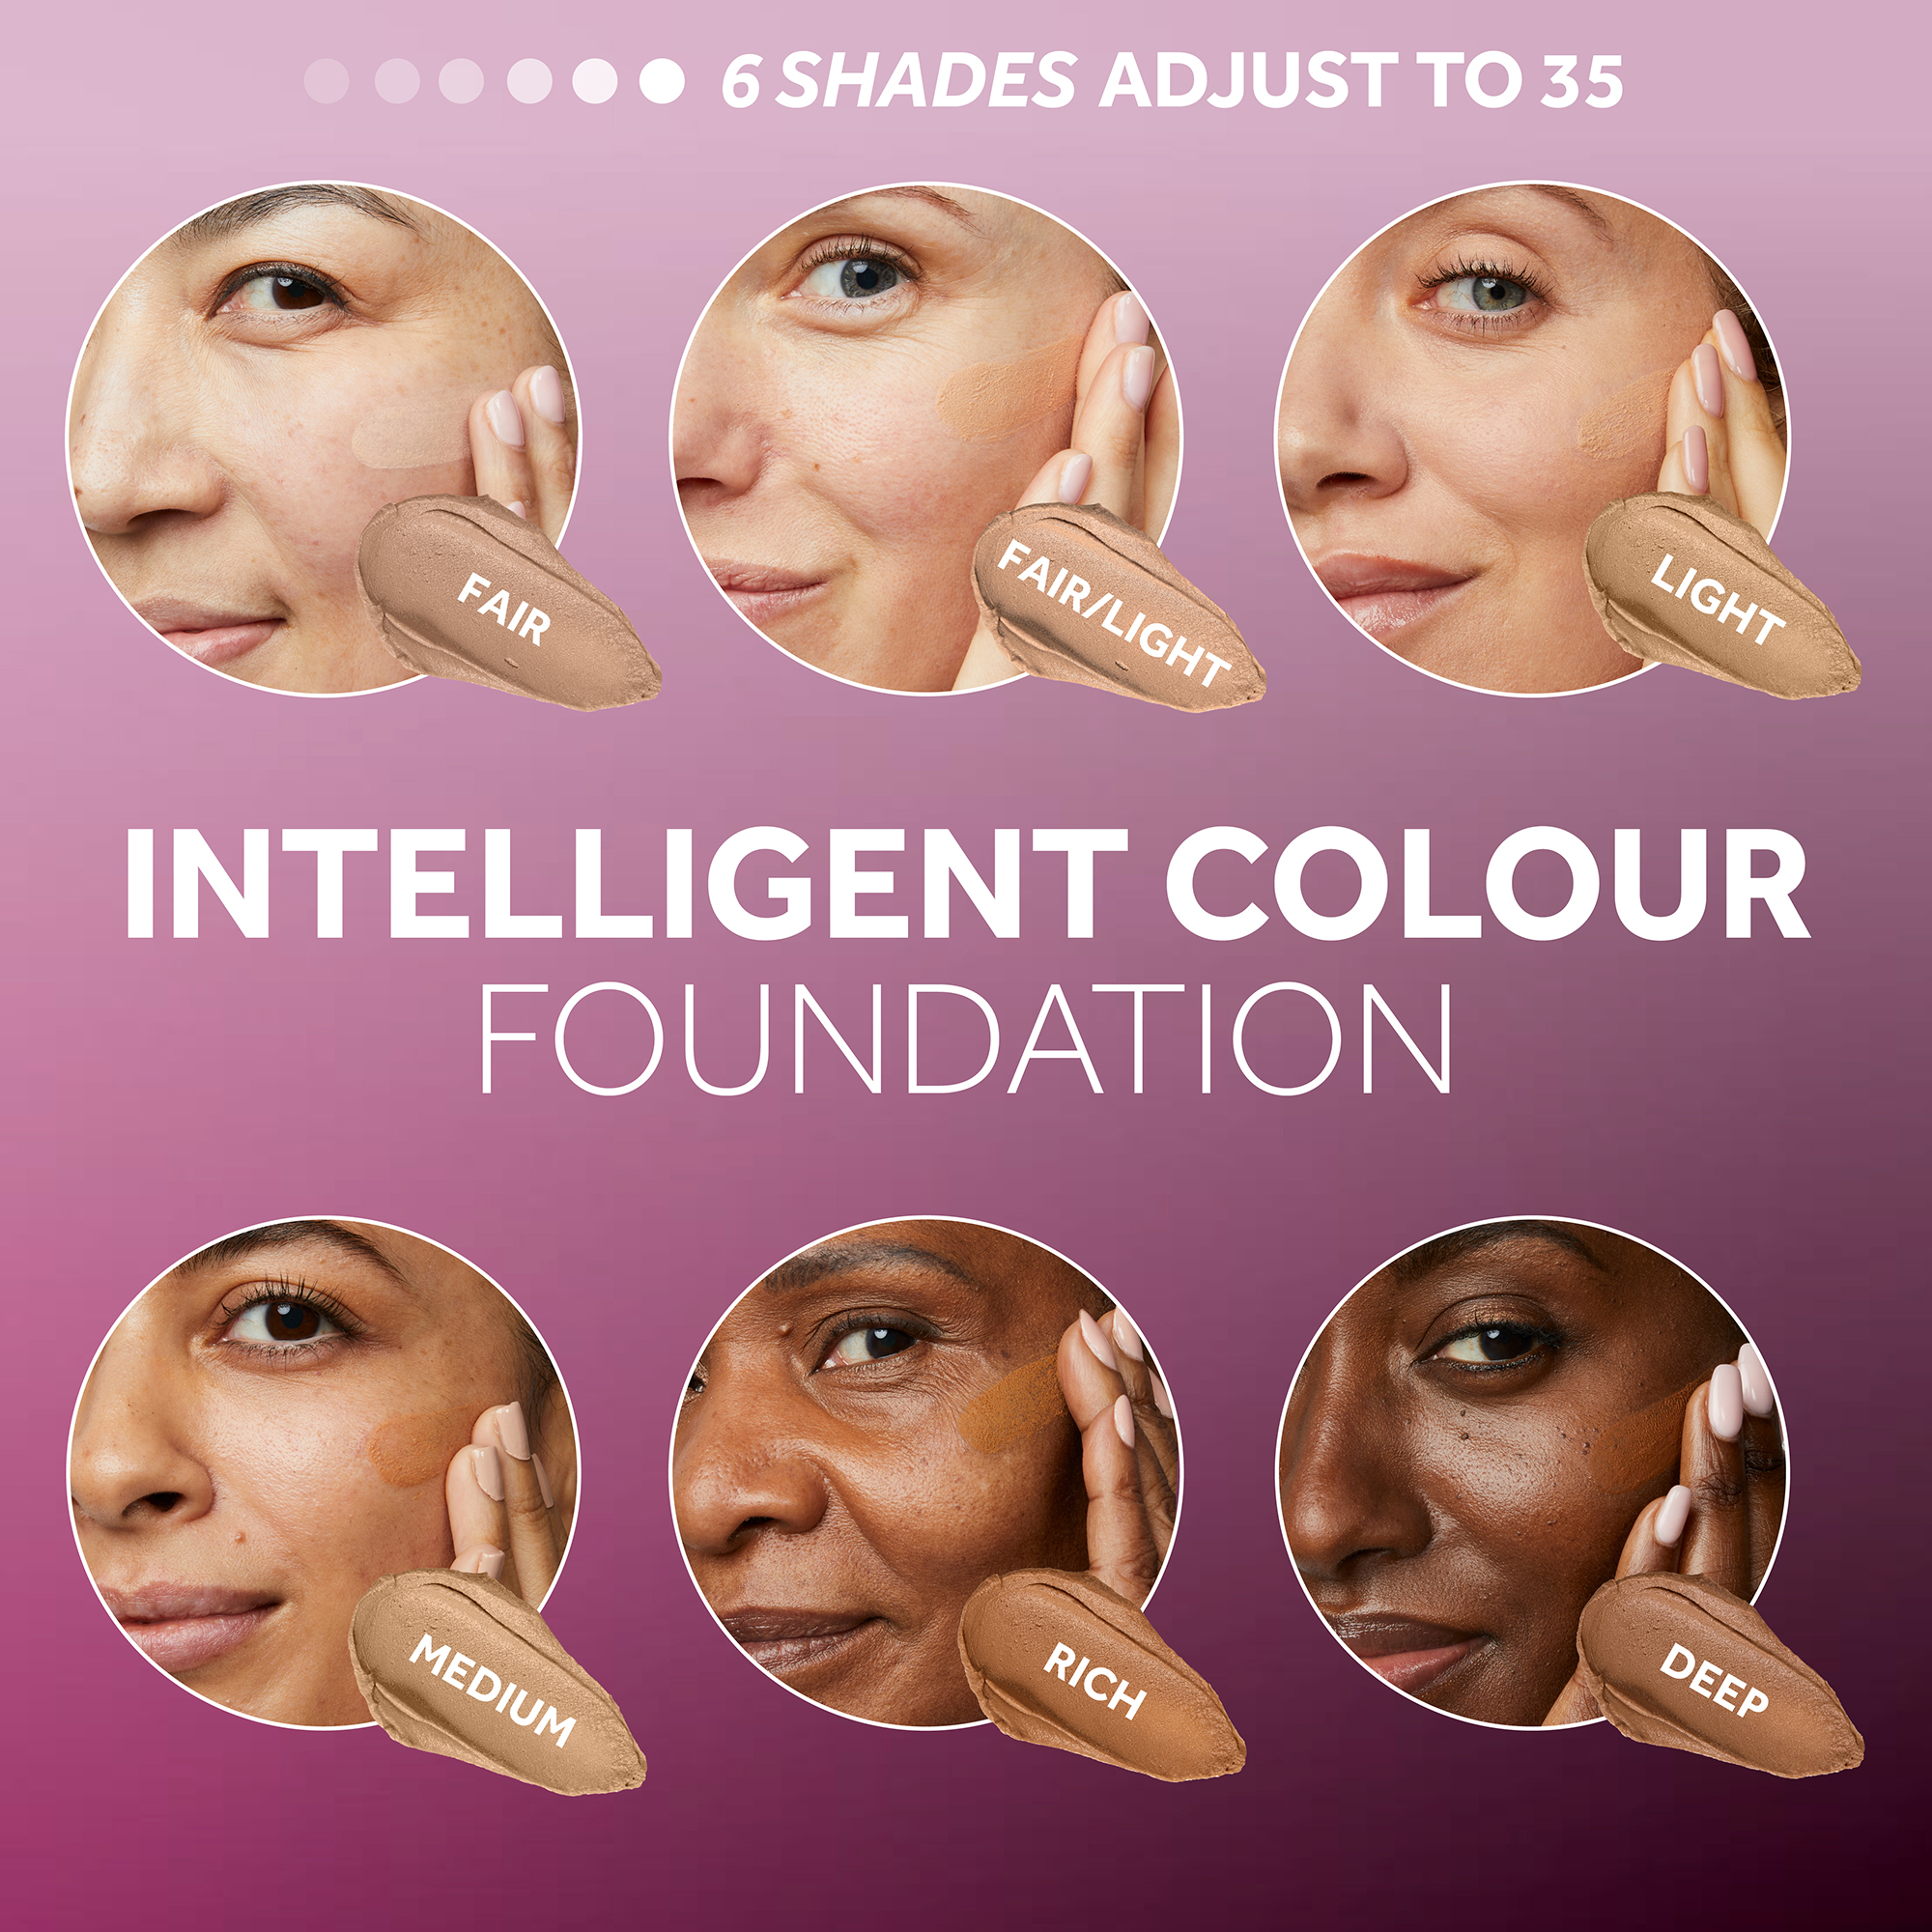 6 shades adjust to 35. Intelligent colour foundation. Fair, Fair/Light, Light, Medium, Rich, Deep